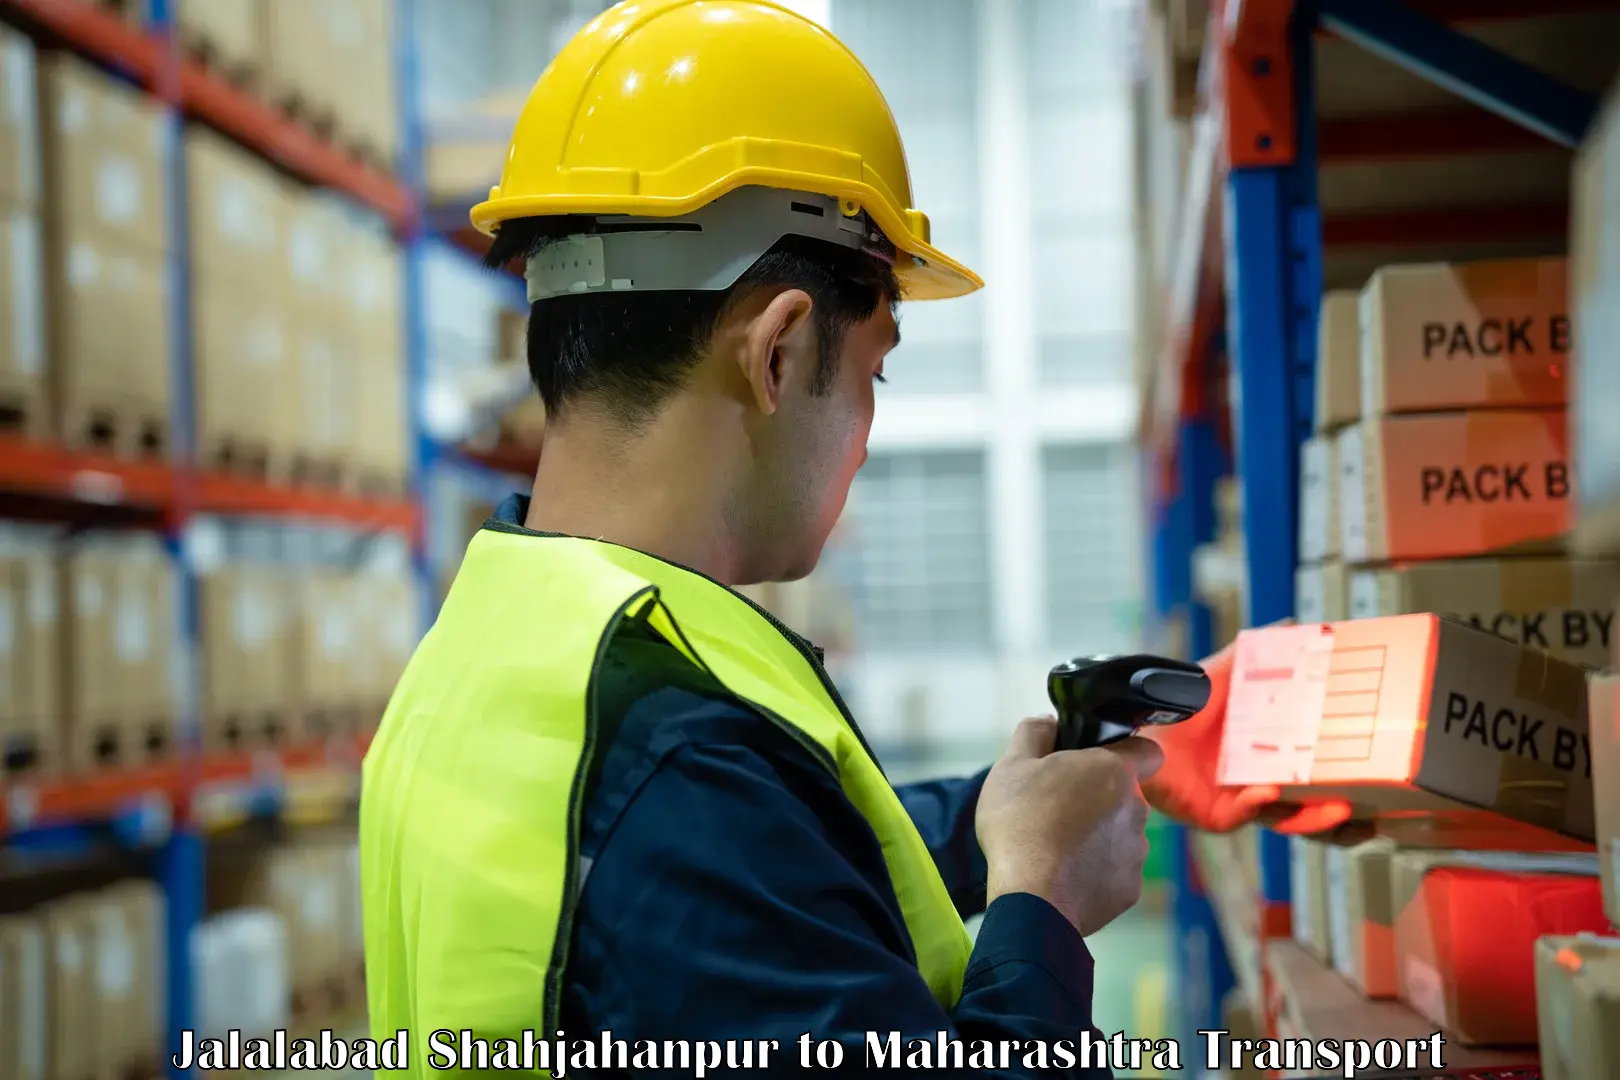 Truck transport companies in India Jalalabad Shahjahanpur to Maharashtra